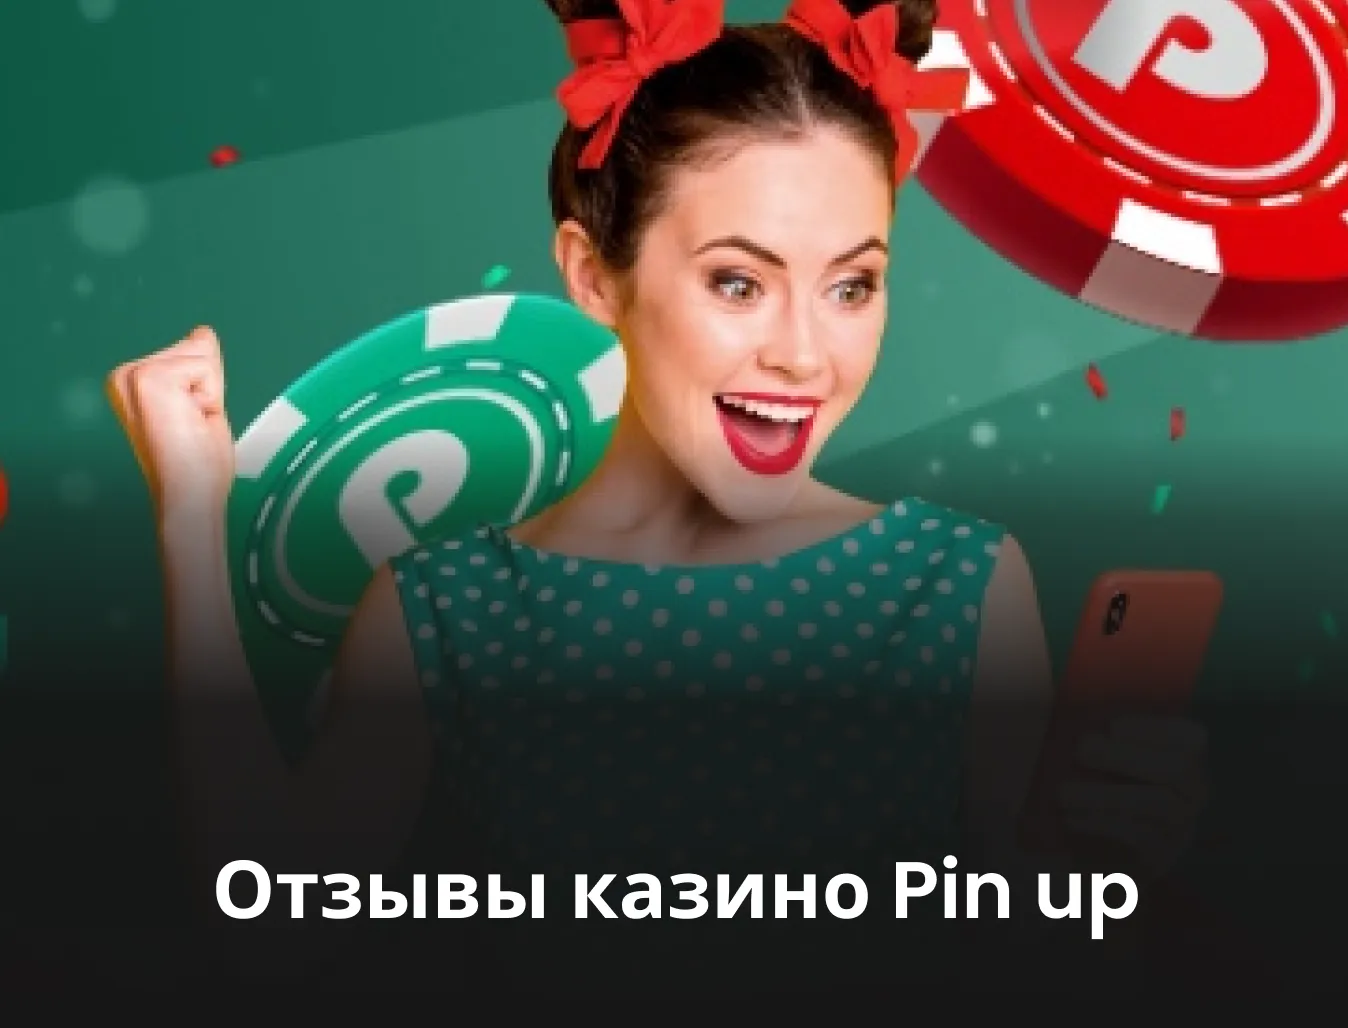 pin up pin up casino play - Готовы ли вы к хорошему?